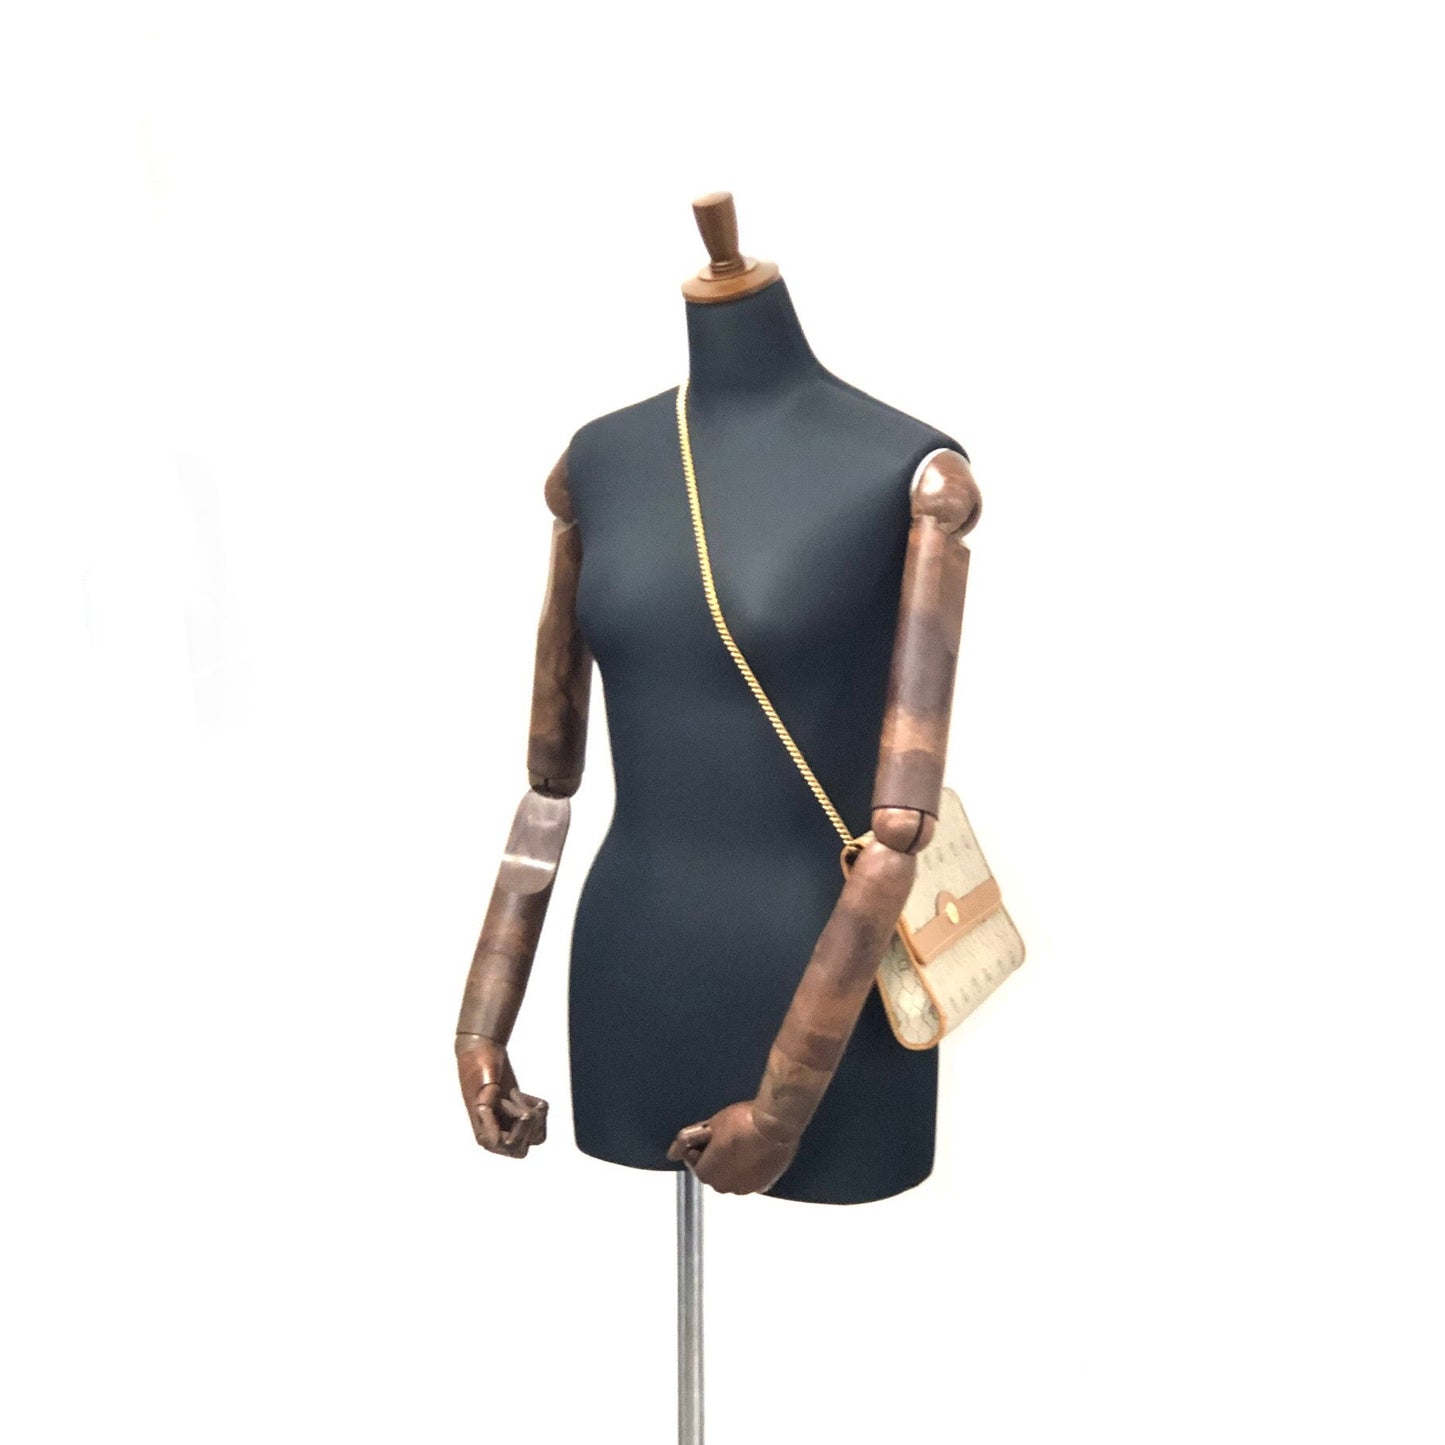 Christian Dior Logo Honeycomb Pattern Chain Crossbody Shoulderbag Beige Vintage Old 74cyaz